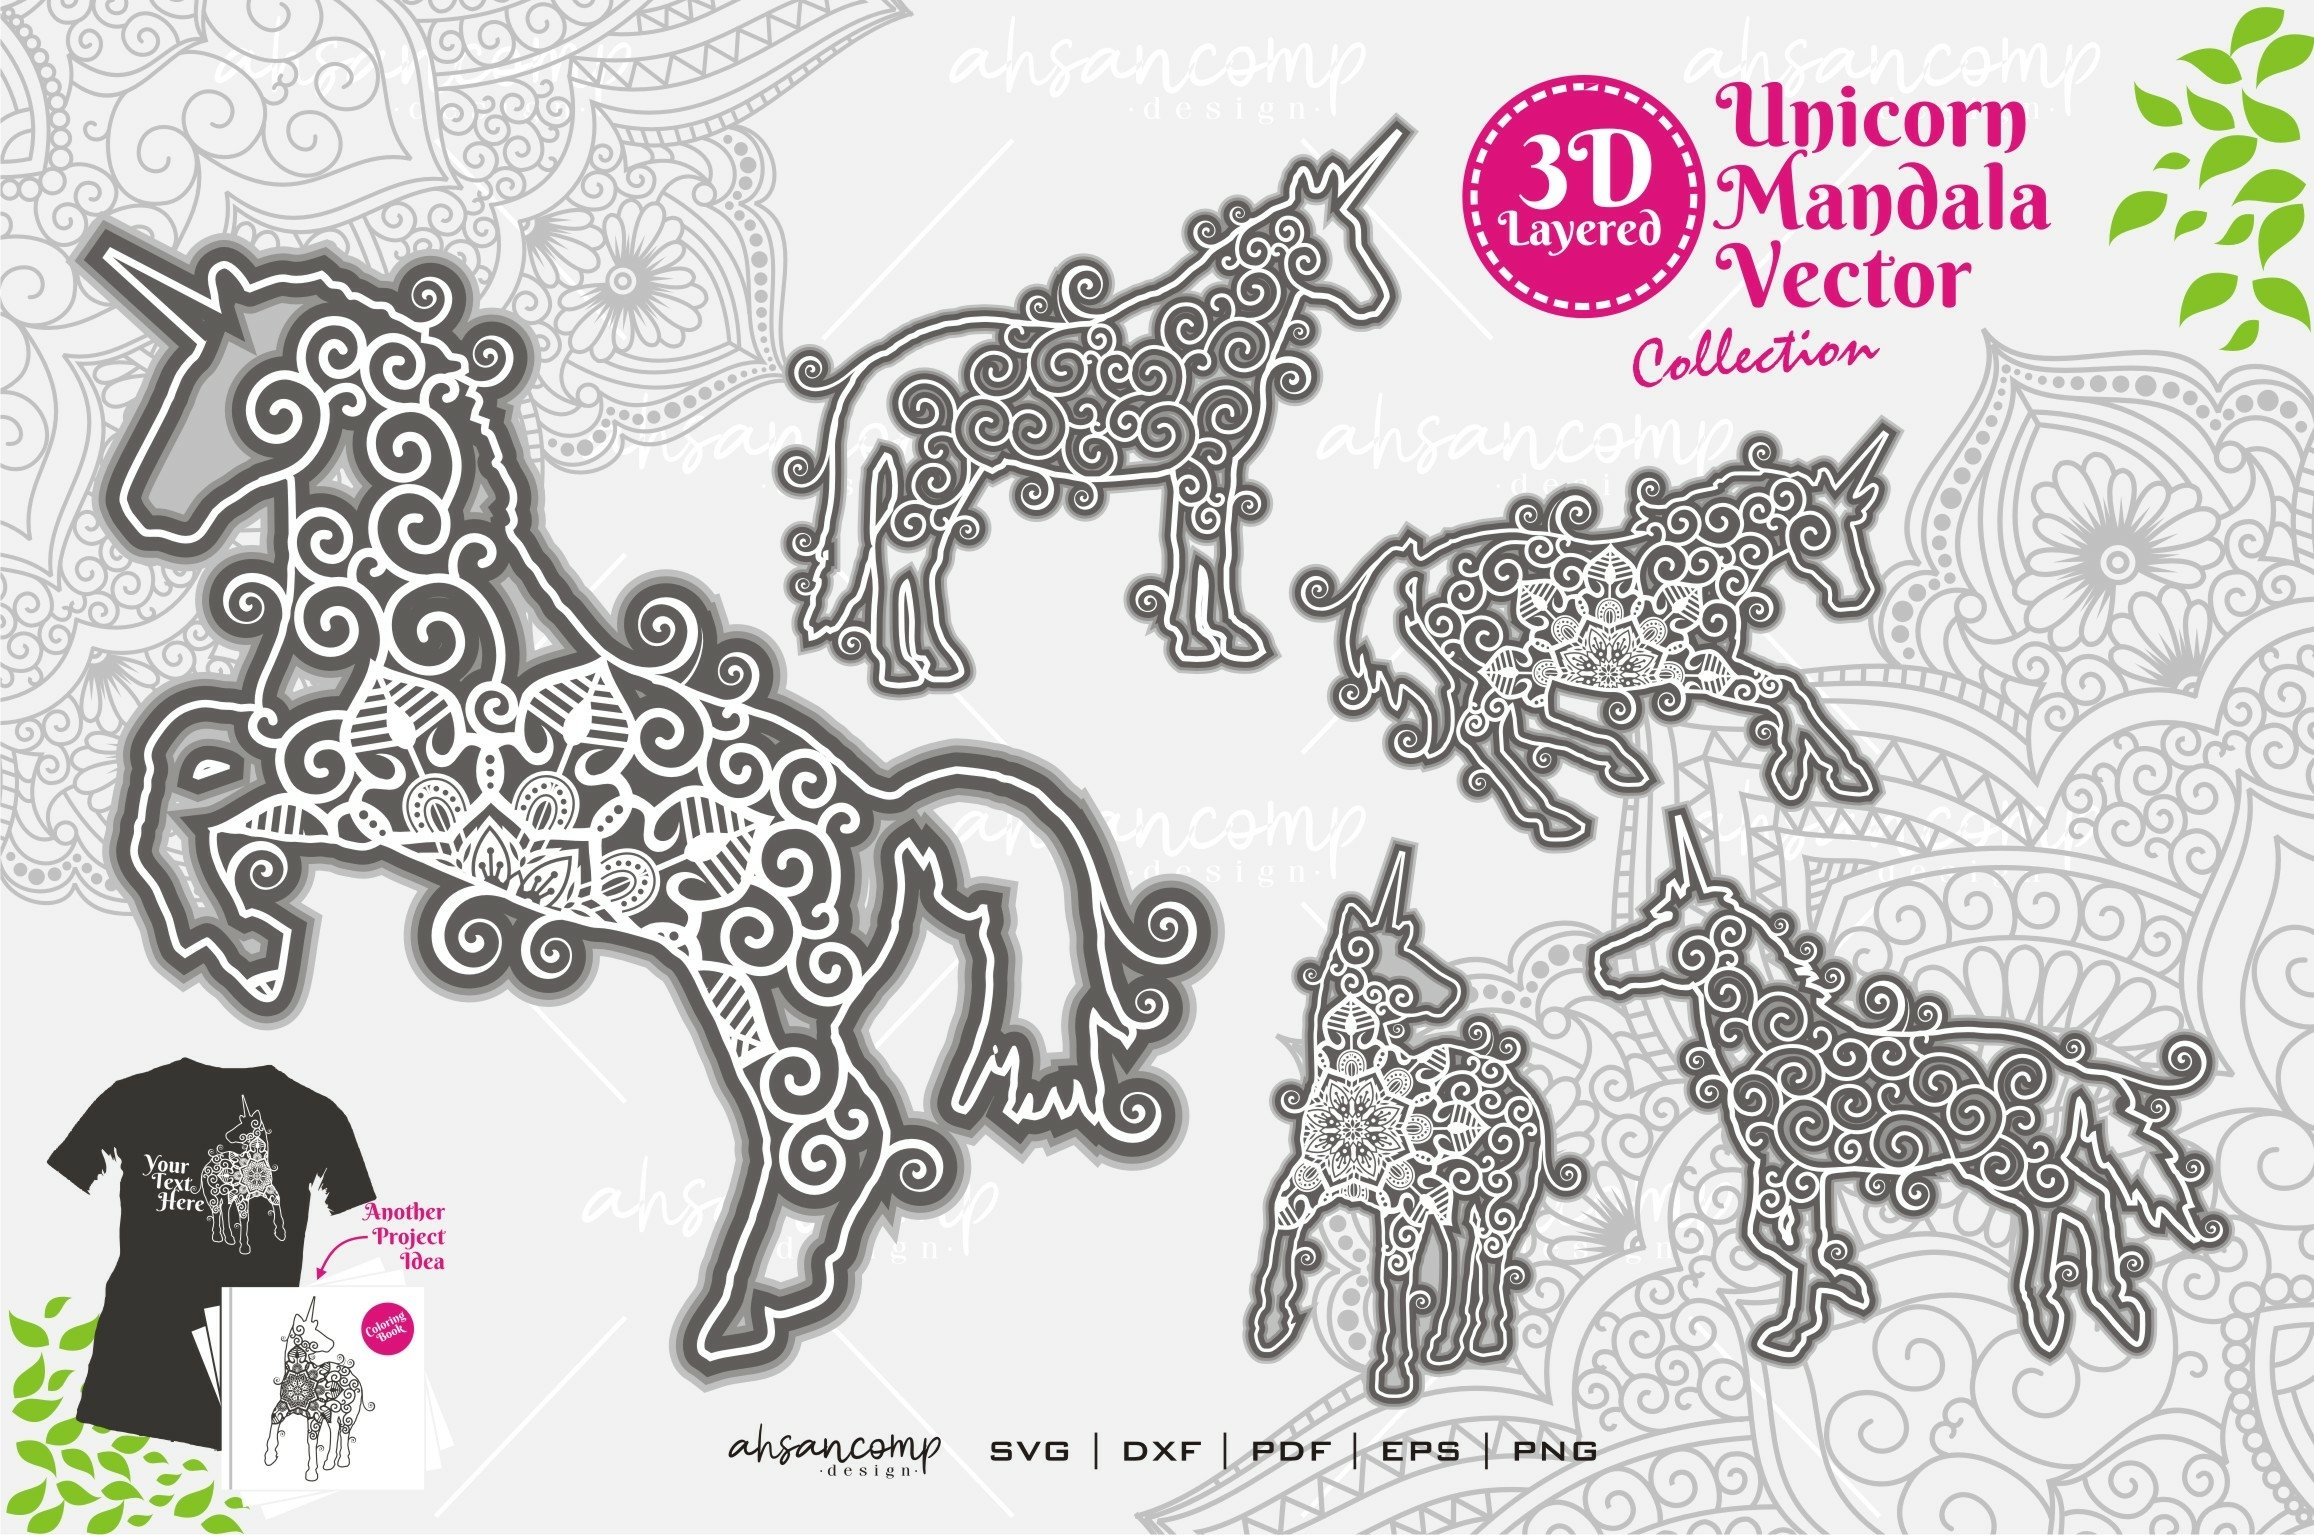 Unicorn mandala vector svg d layered